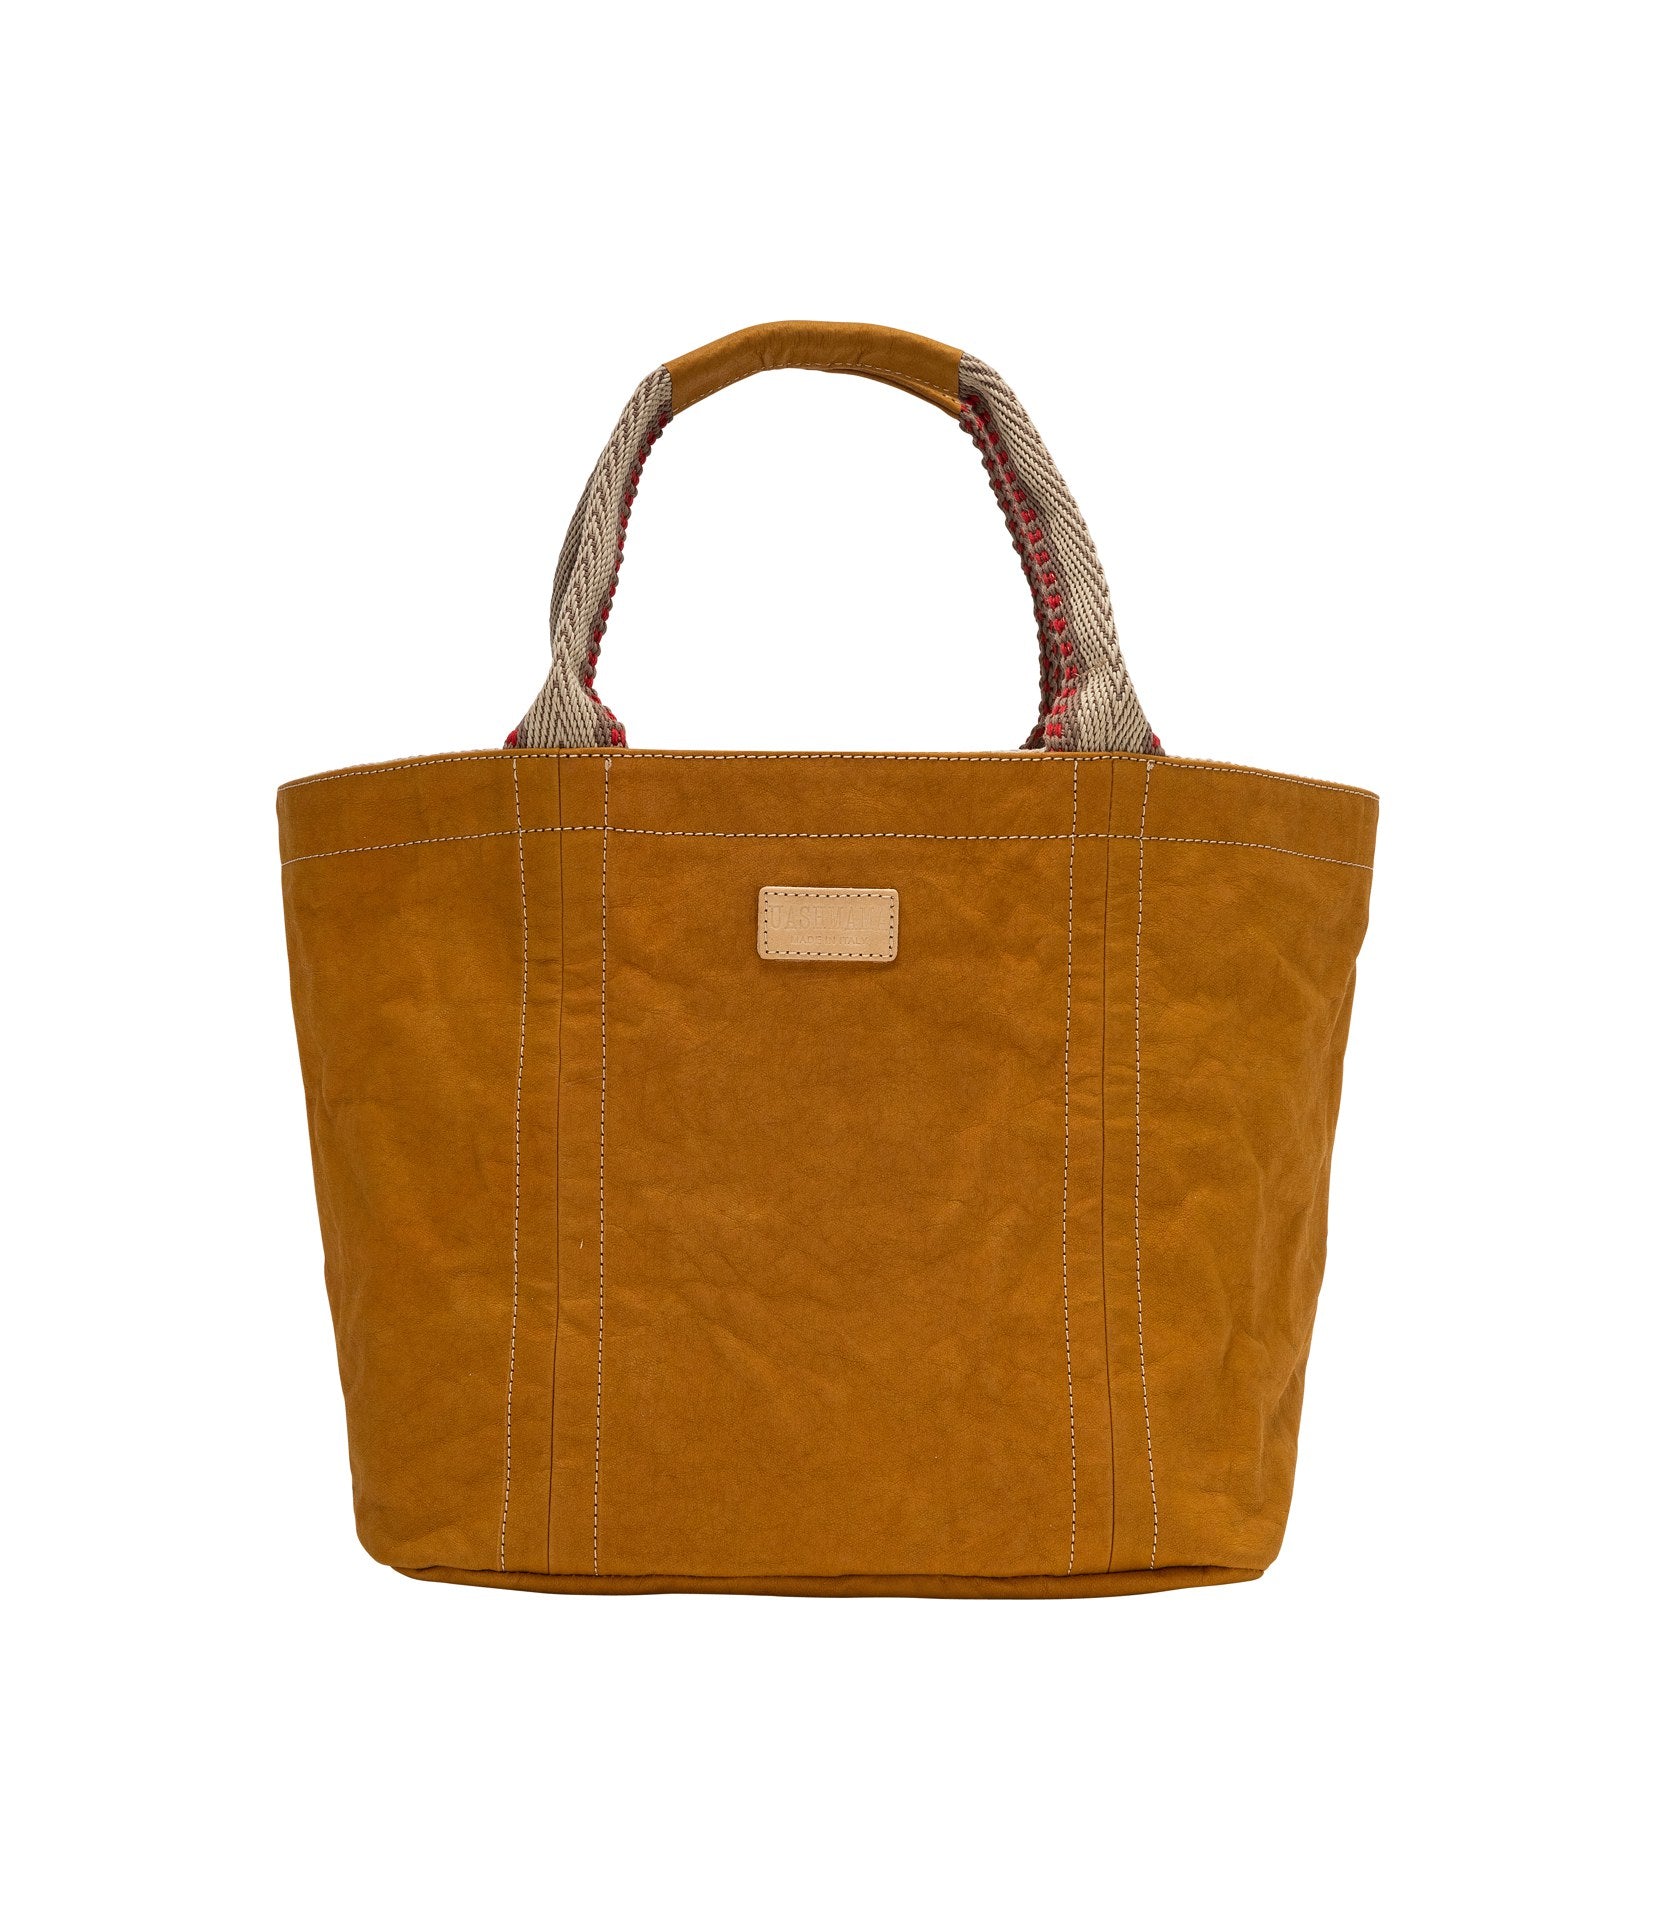 Uashmama Shopper or Diaper Bag  Practical, Pockets, Sustainable